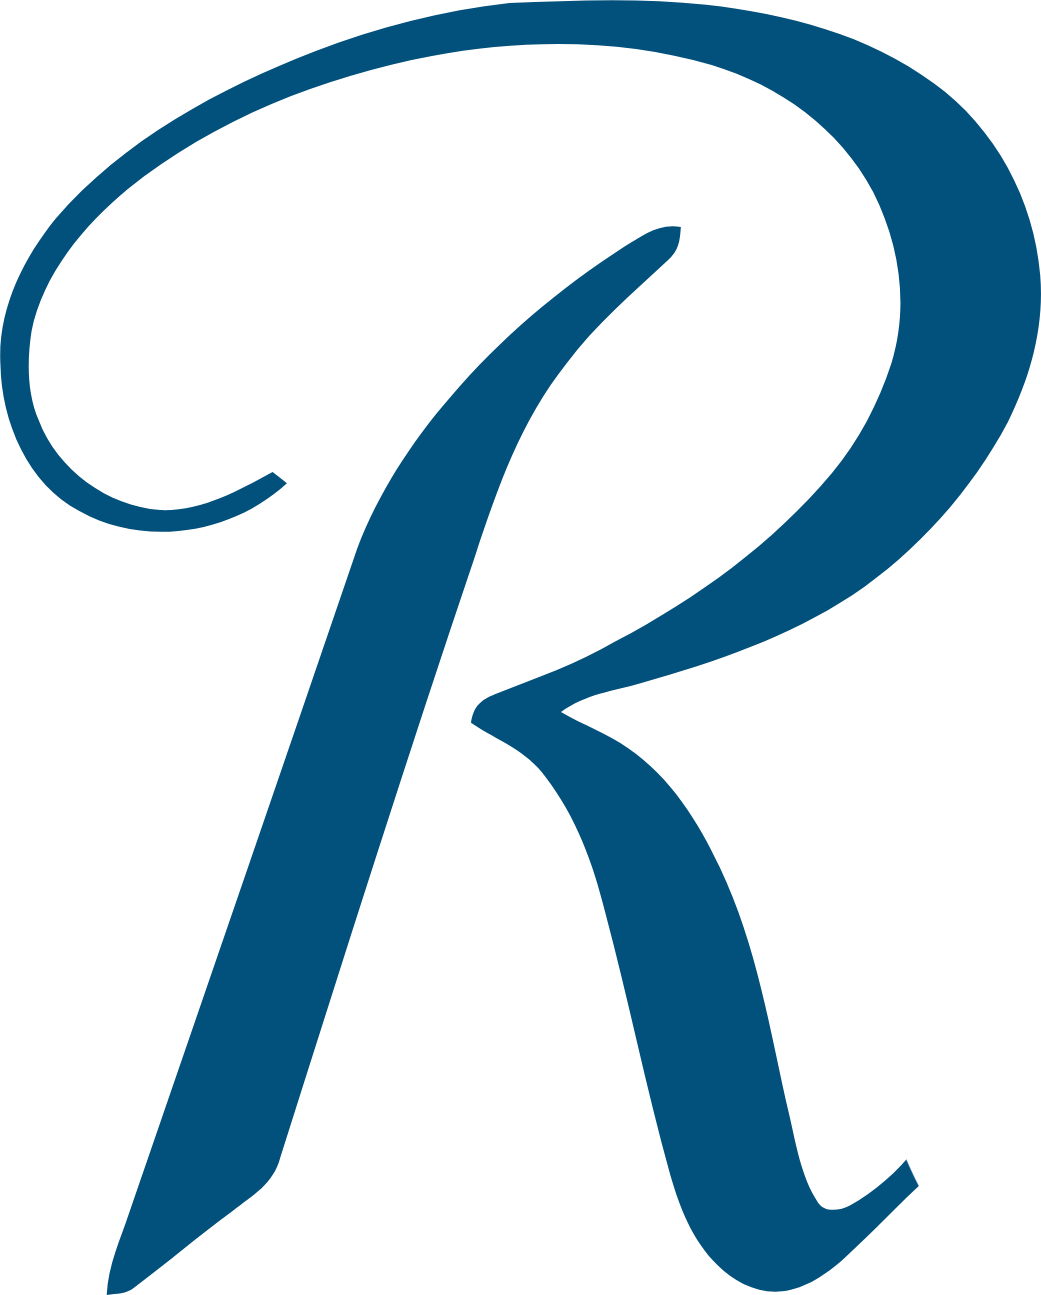 RenaissanceRe logo in transparent PNG format